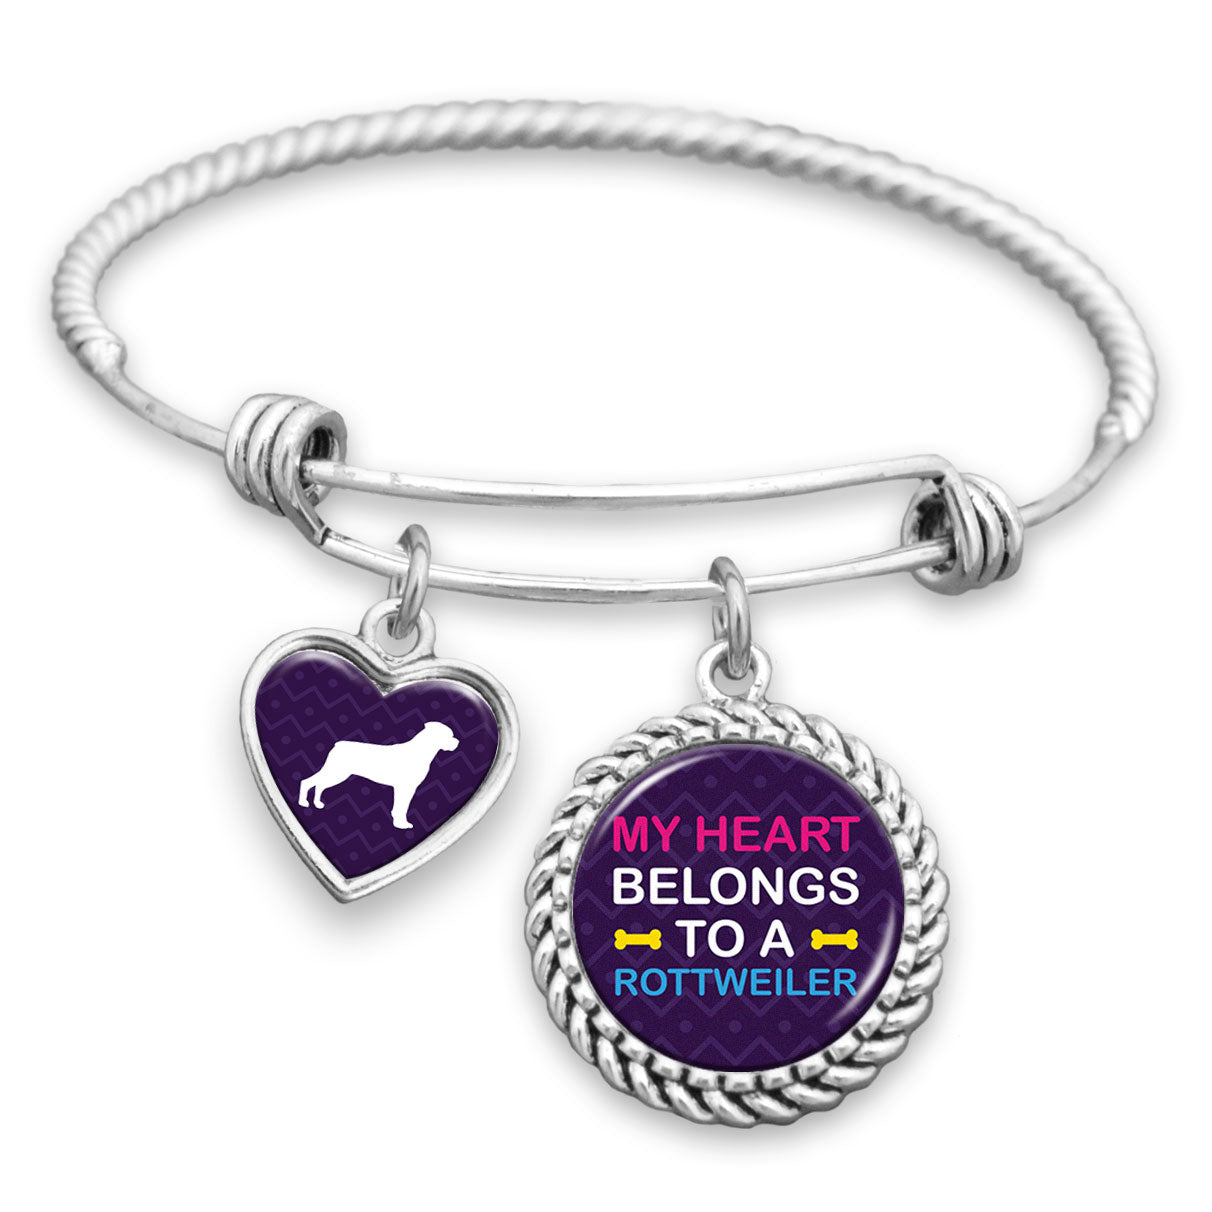 My Heart Belongs To A Rottweiler Charm Bracelet